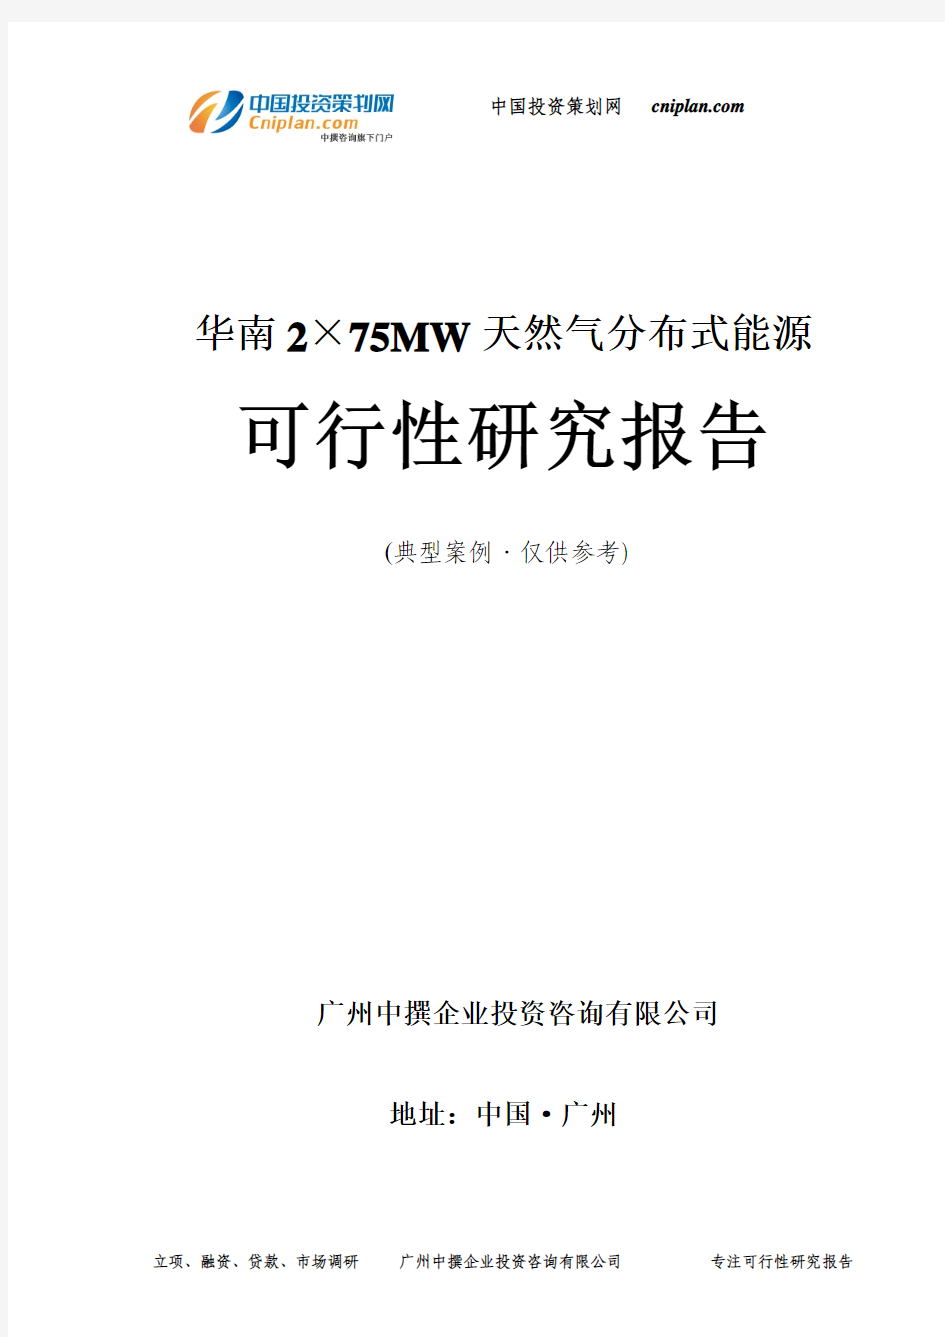 2×75MW天然气分布式能源可行性研究报告-广州中撰咨询